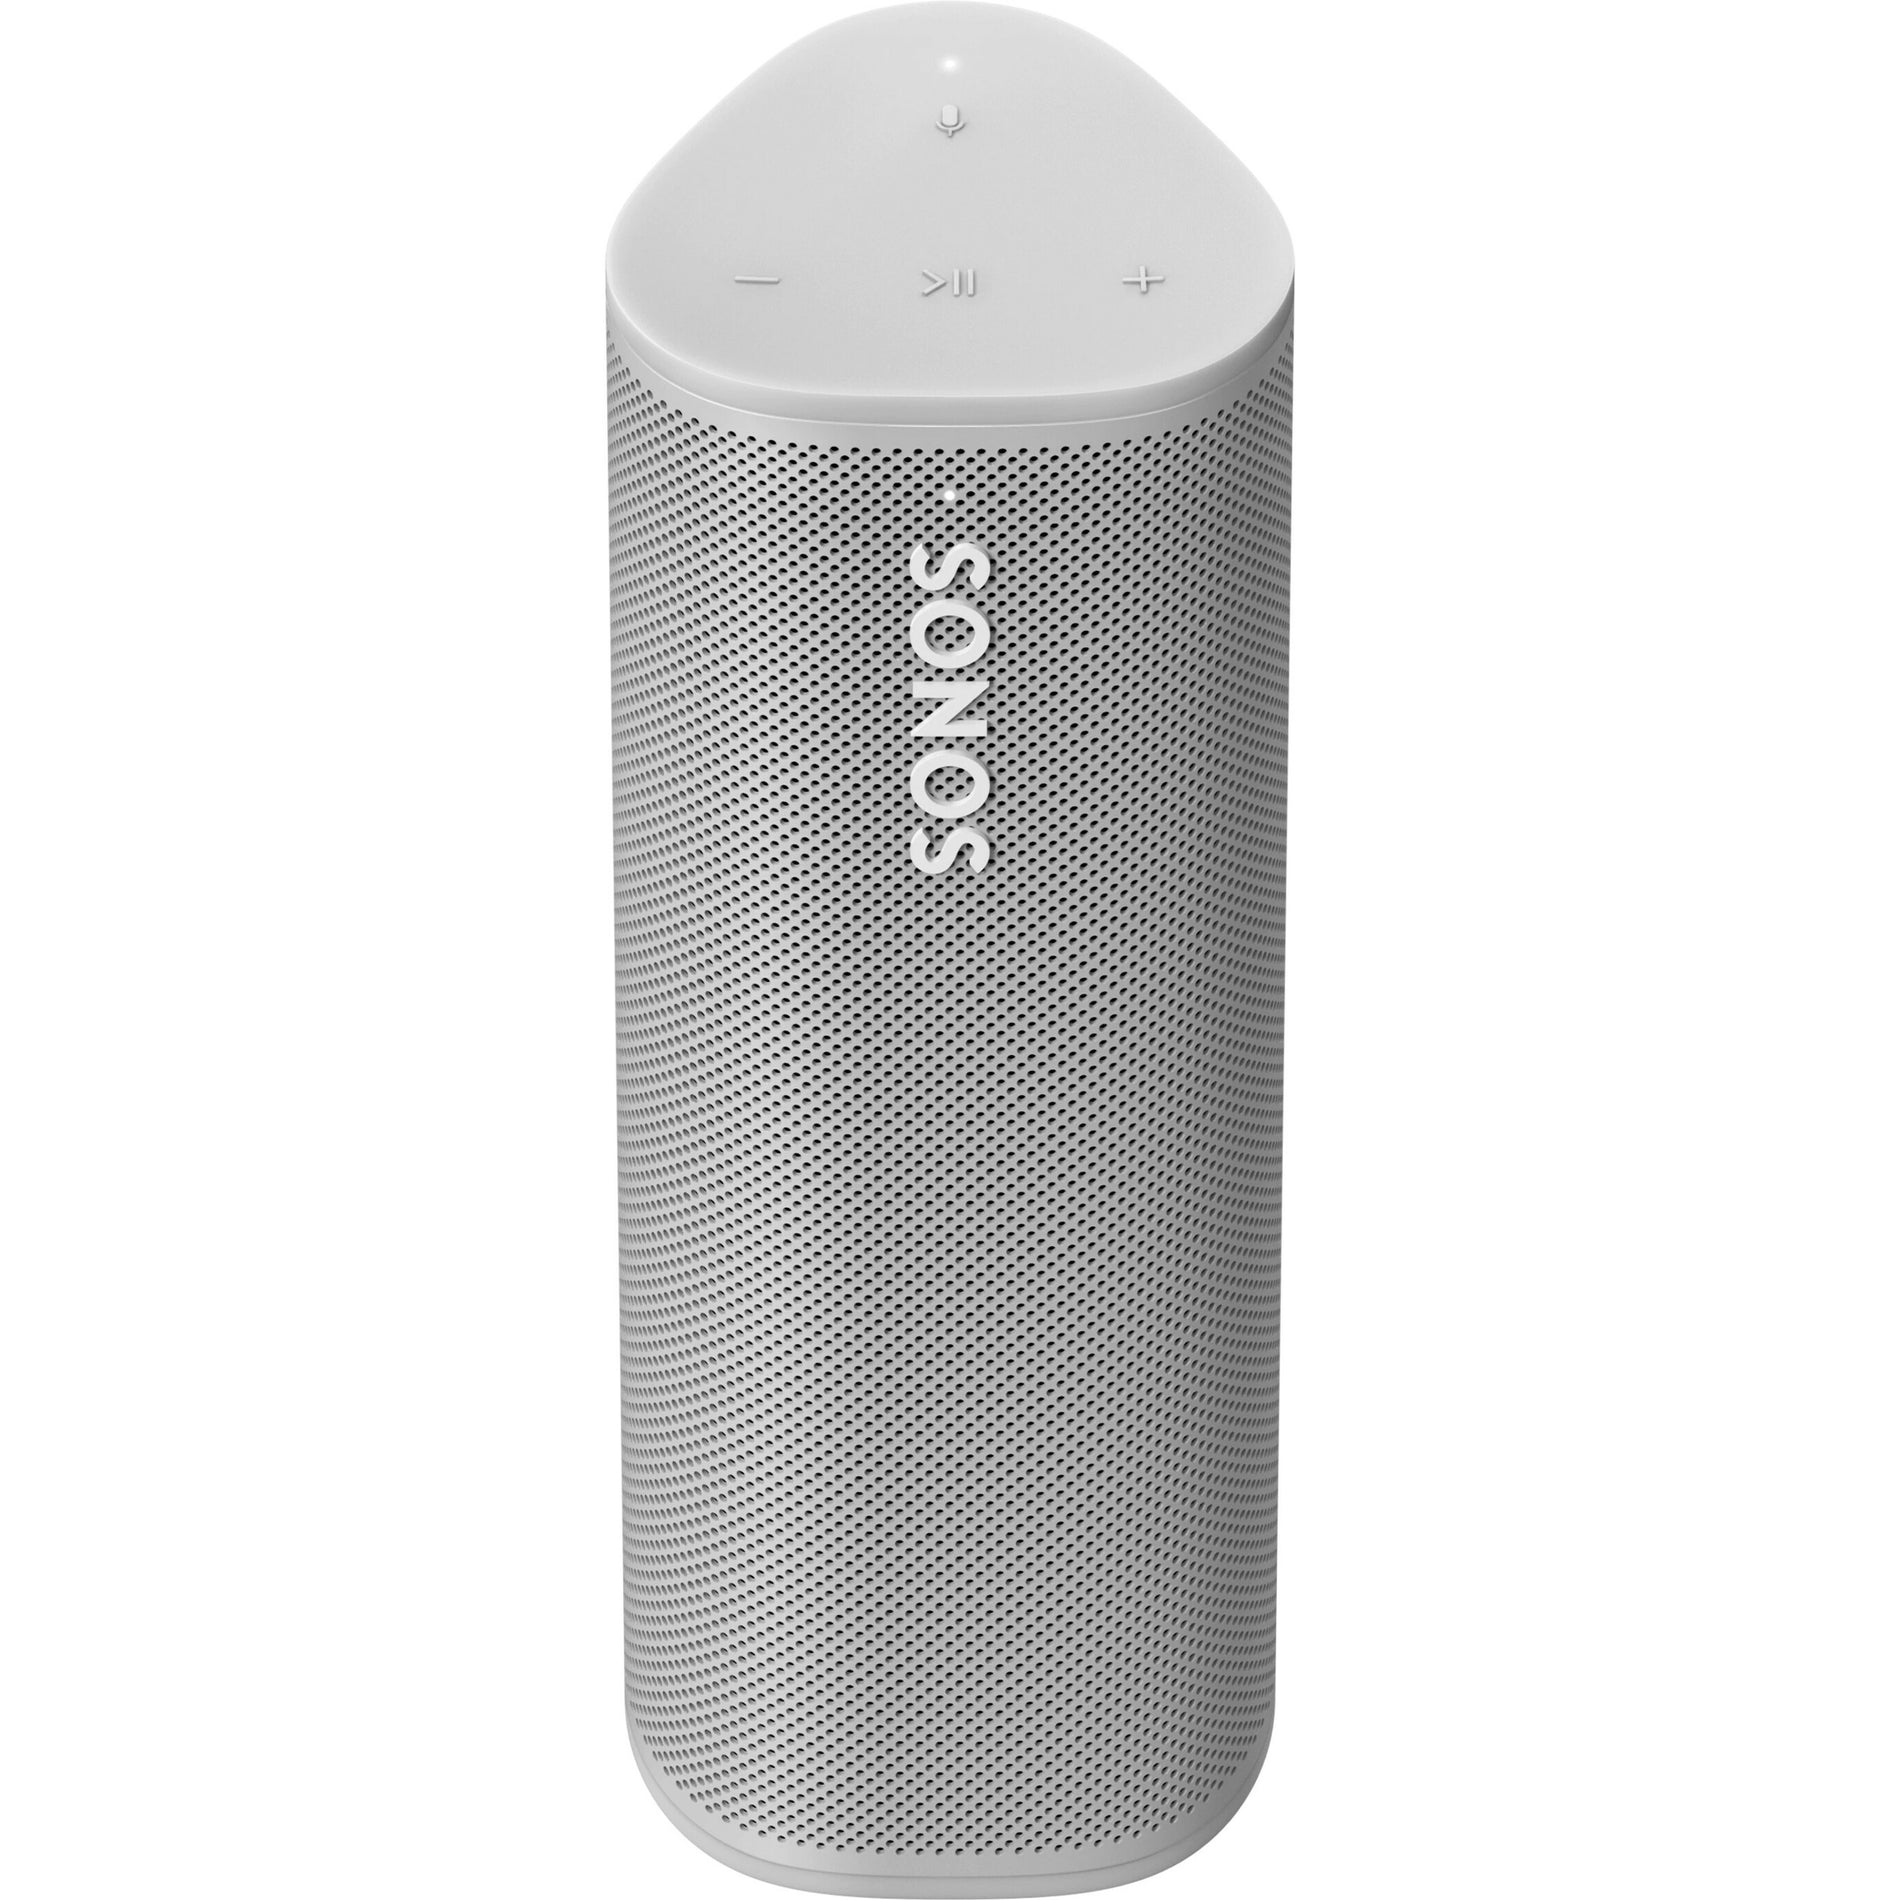 SONOS ROAM1US1 Roam Smart Speaker, Portable Wi-Fi and Bluetooth Speaker with Amazon Alexa and Google Assistant, White